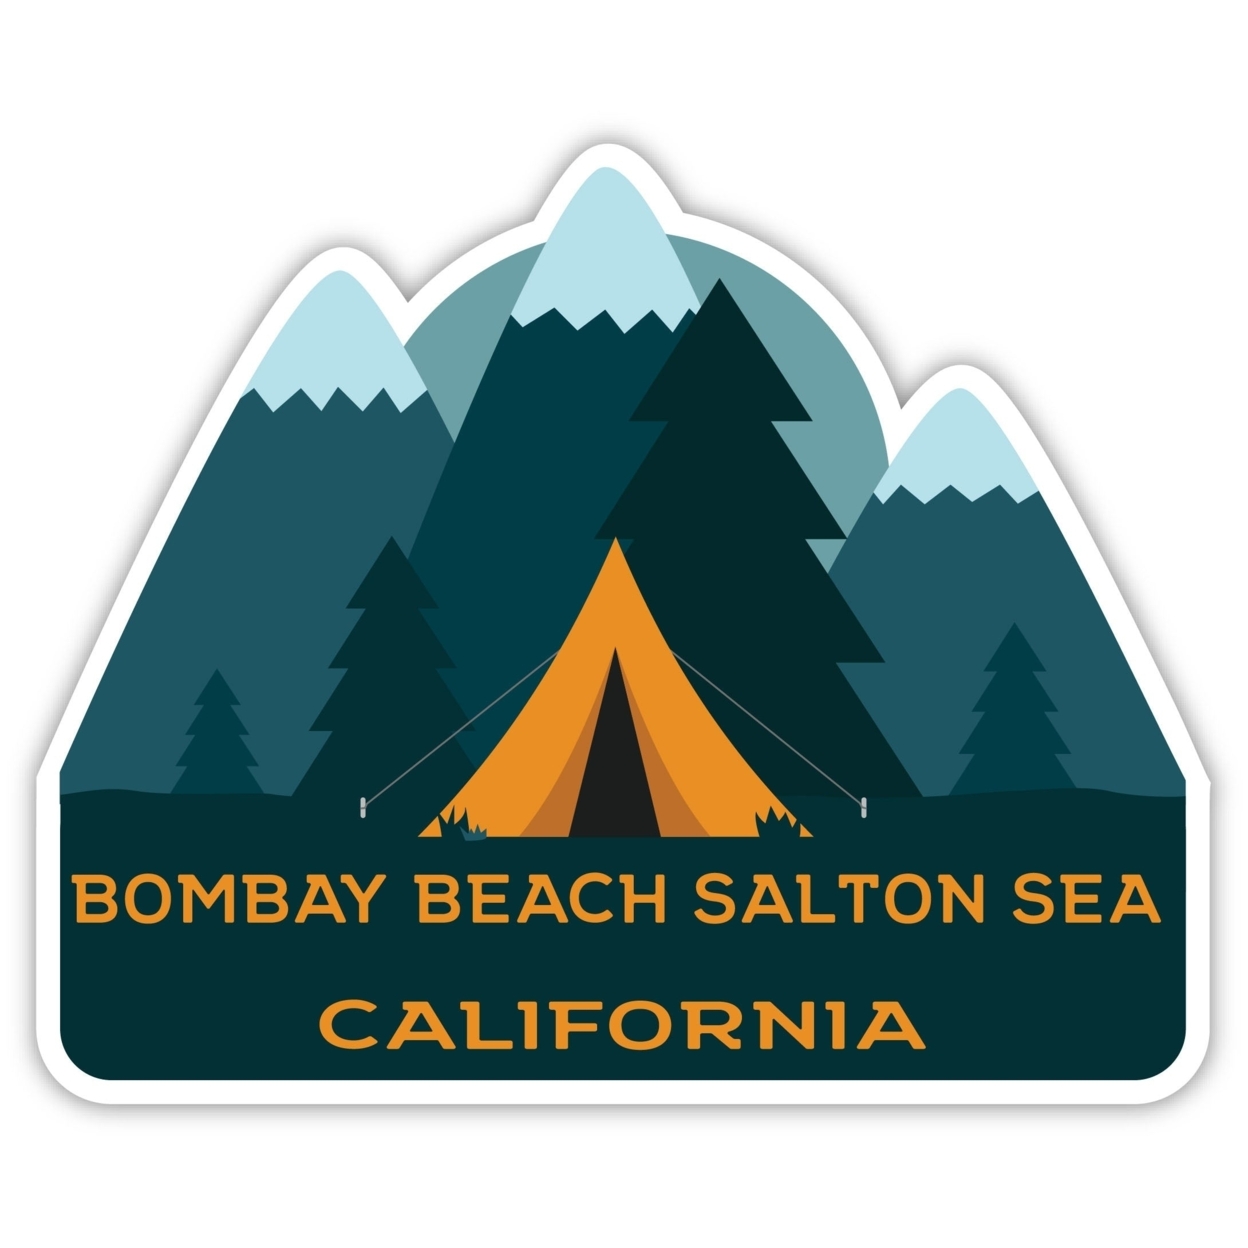 Bombay Beach Salton Sea California Souvenir Decorative Stickers (Choose Theme And Size) - 4-Pack, 6-Inch, Tent